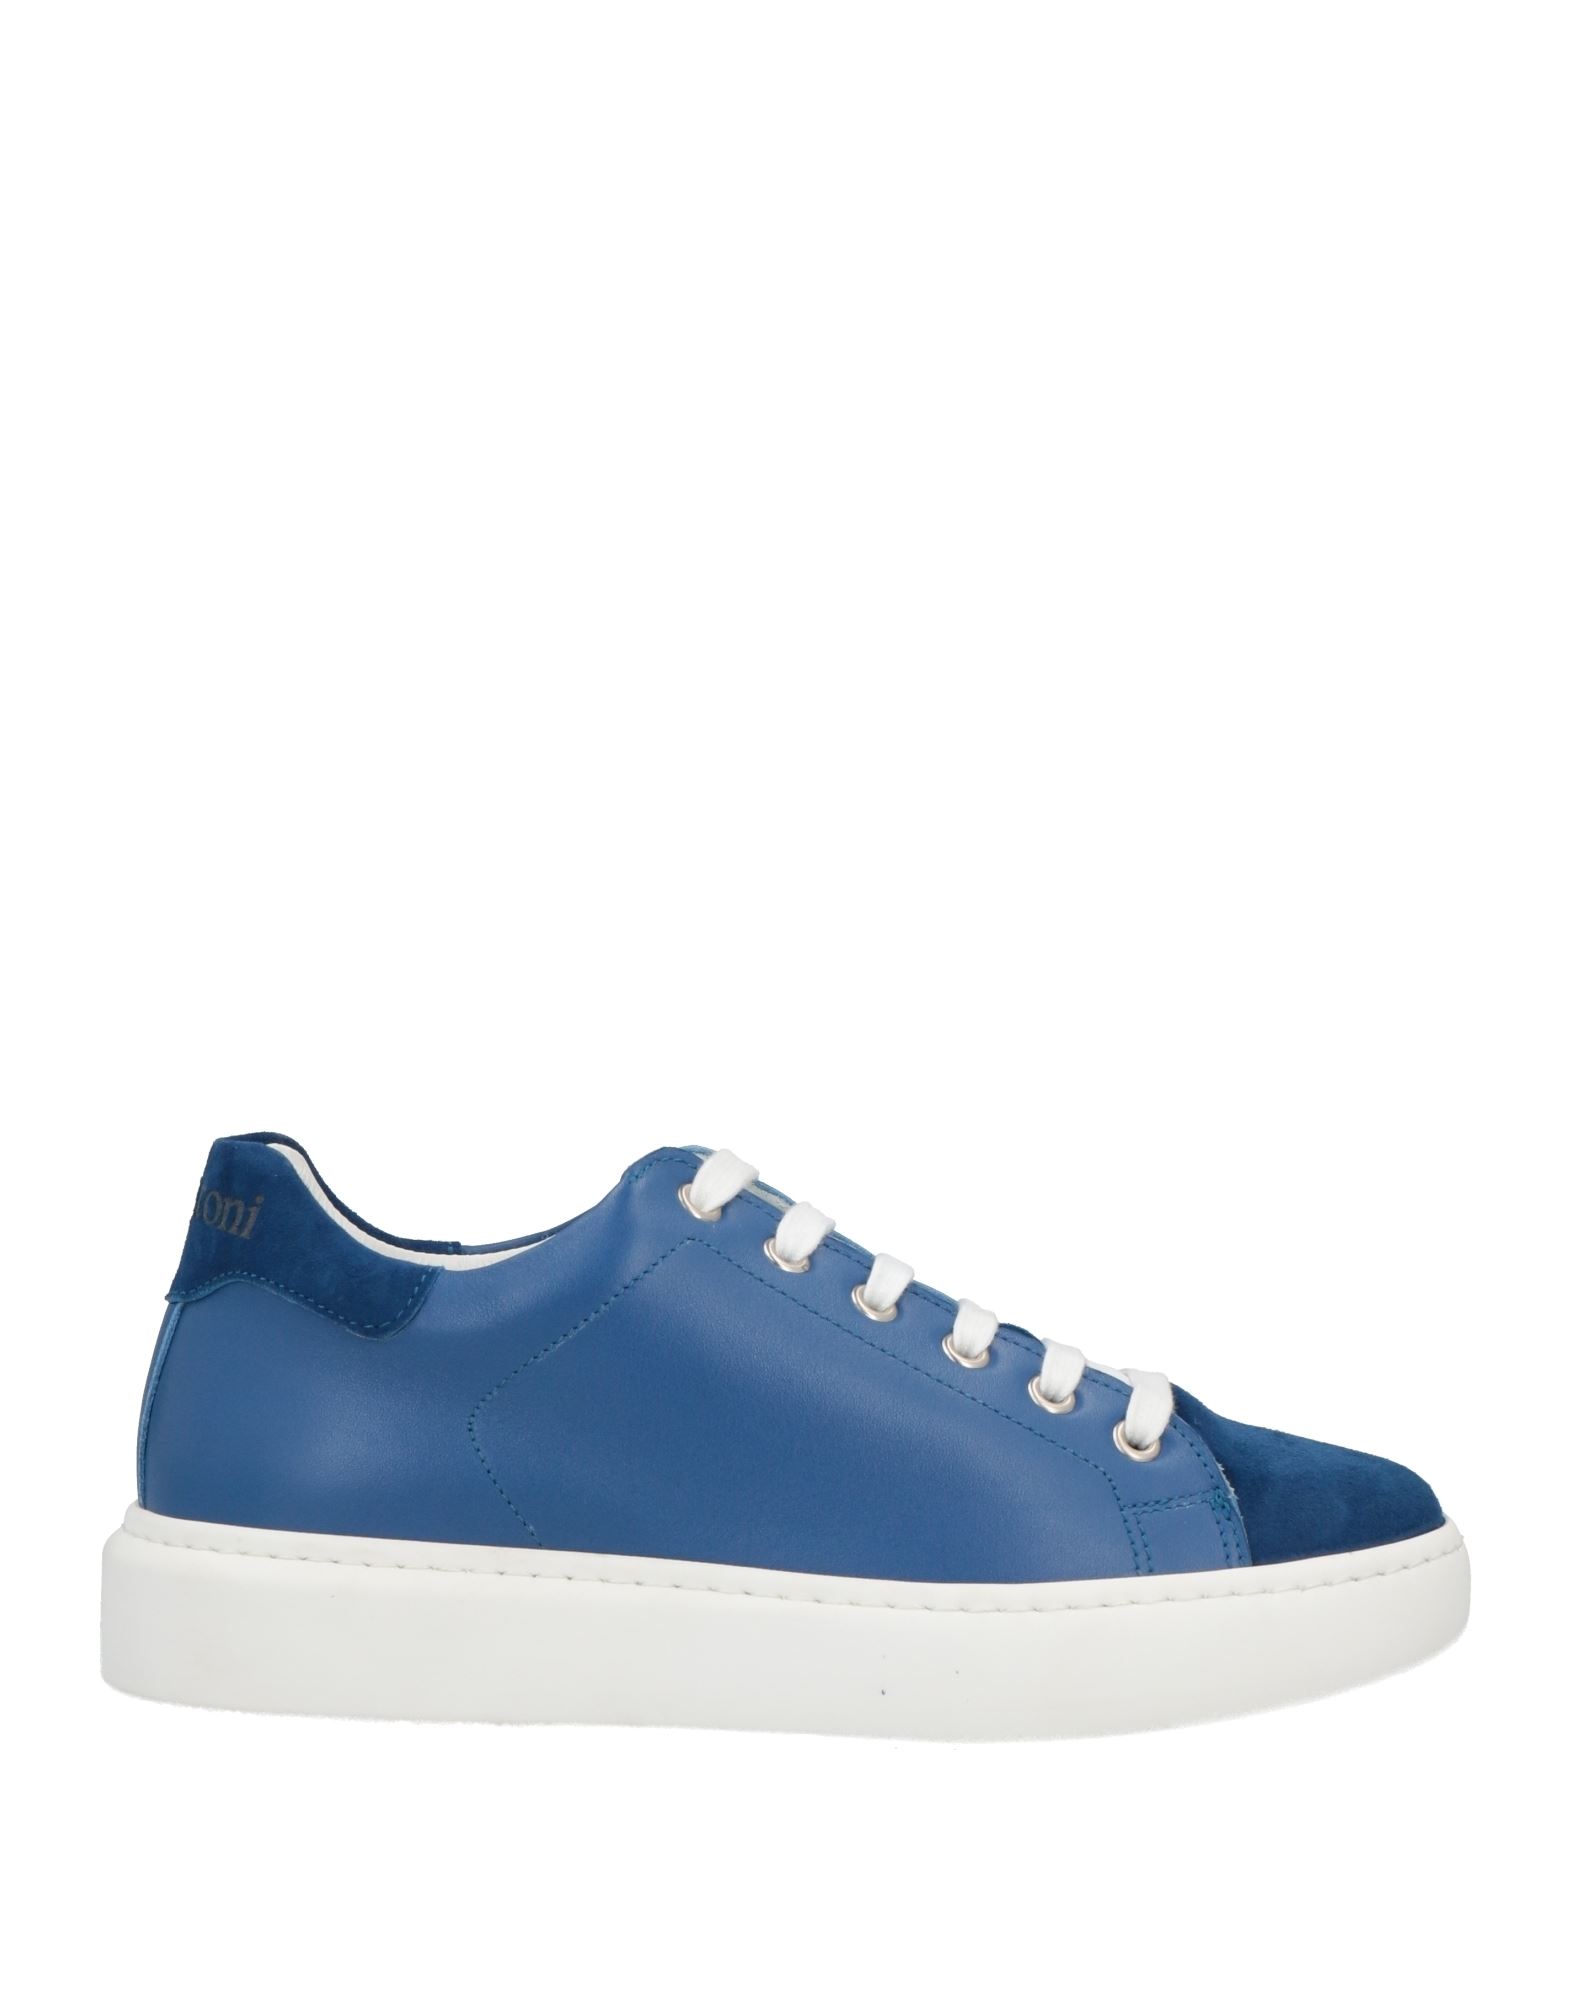 A.testoni Sneakers In Bright Blue